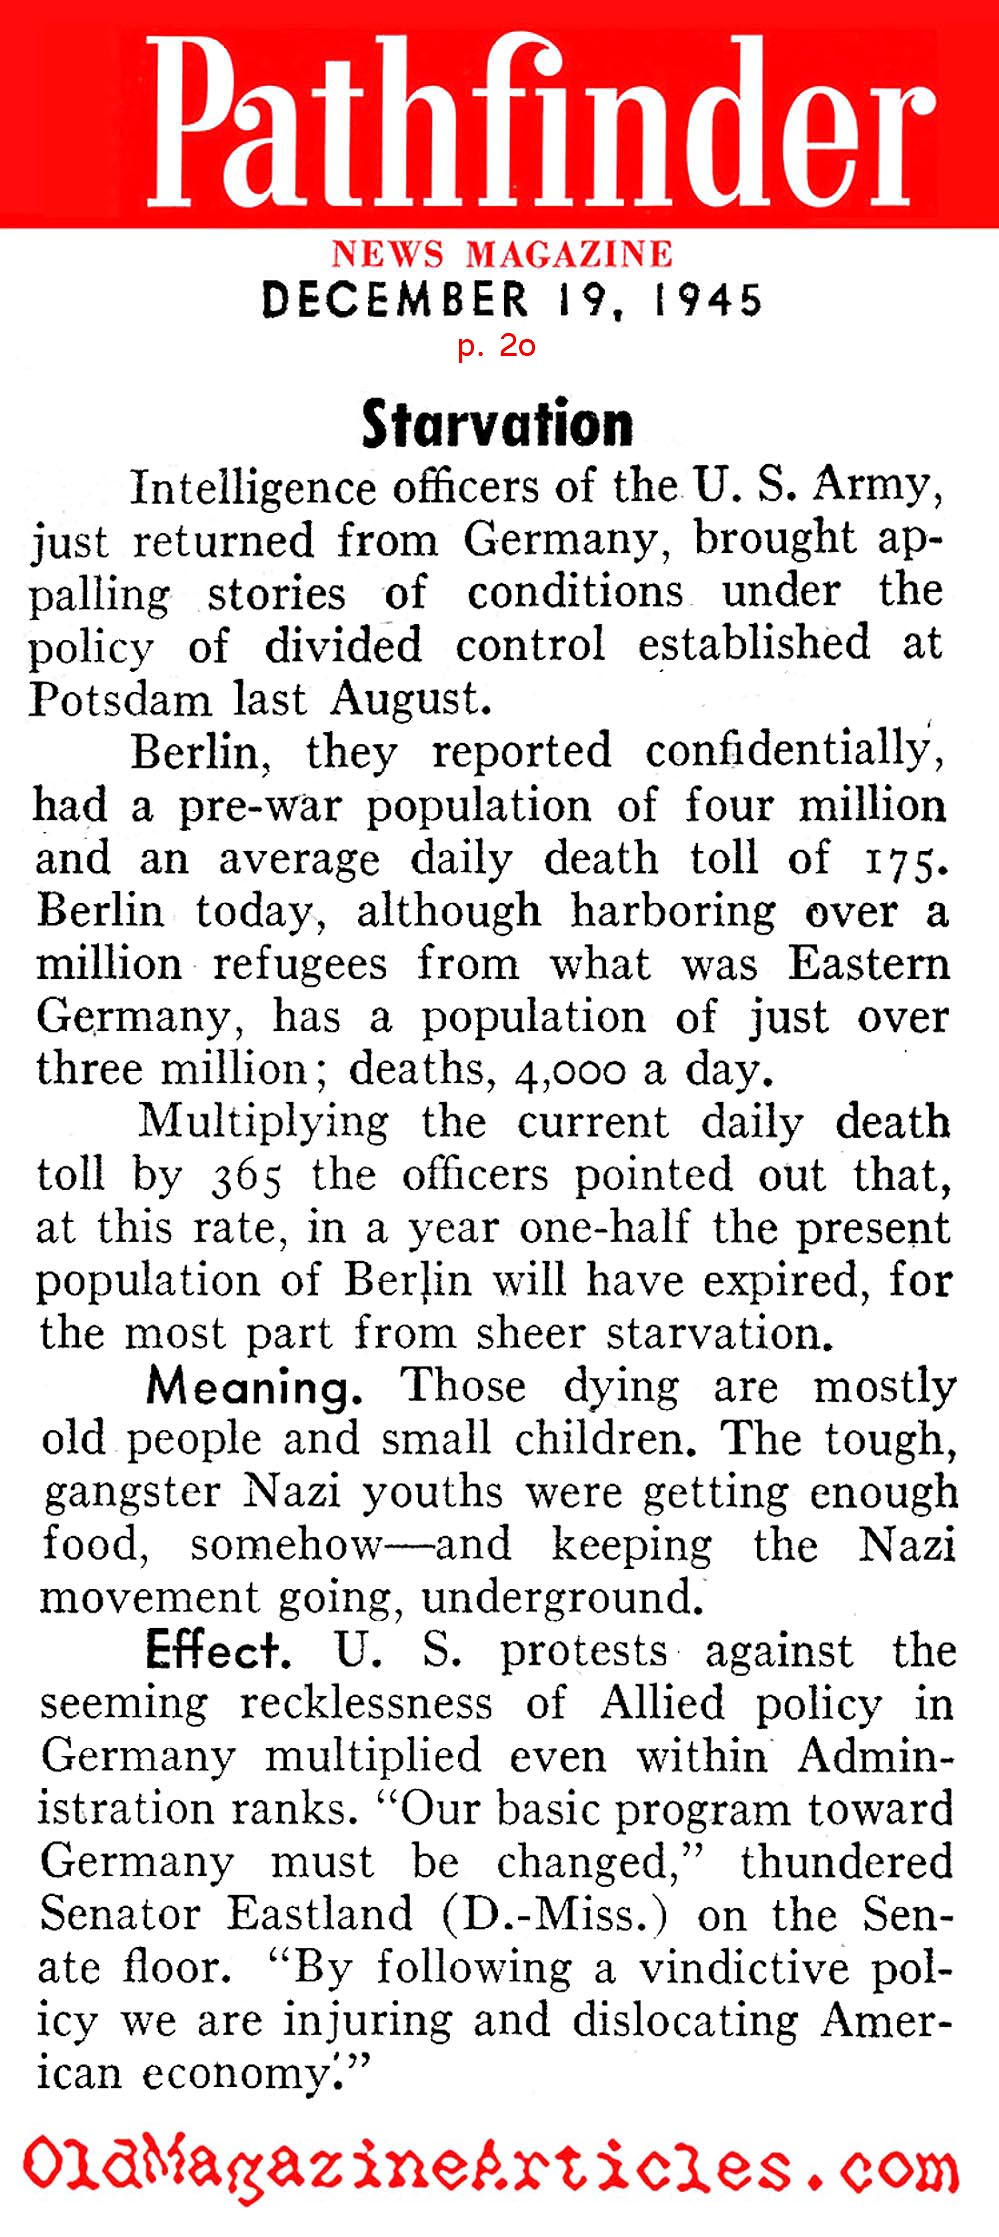 Starvation (Pathfinder Magazine, 1945)